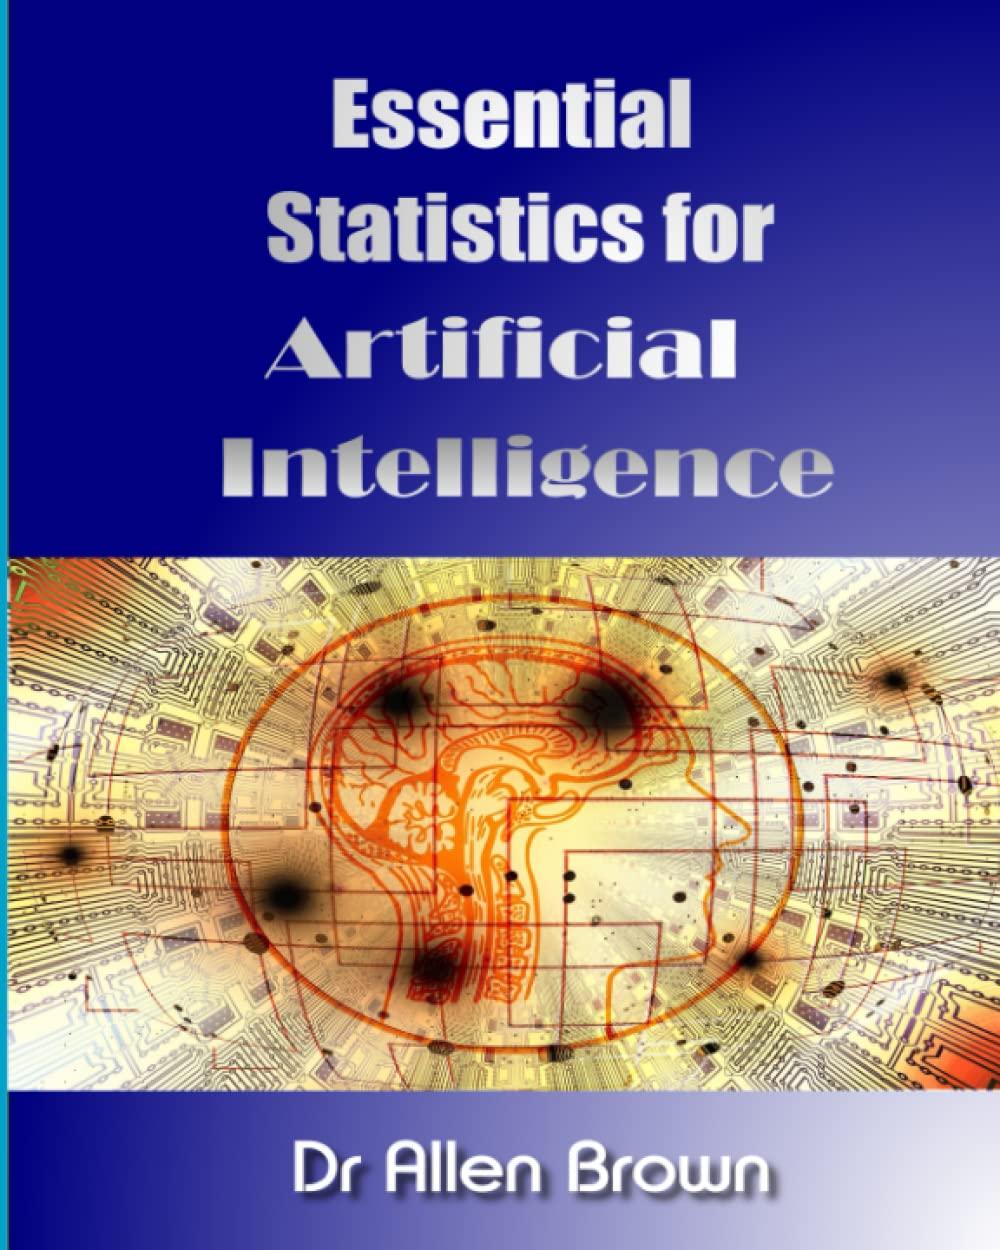 essential statistics for artificial intelligence 1st edition dr allen brown b0b7q3dxxm, 979-8842723805